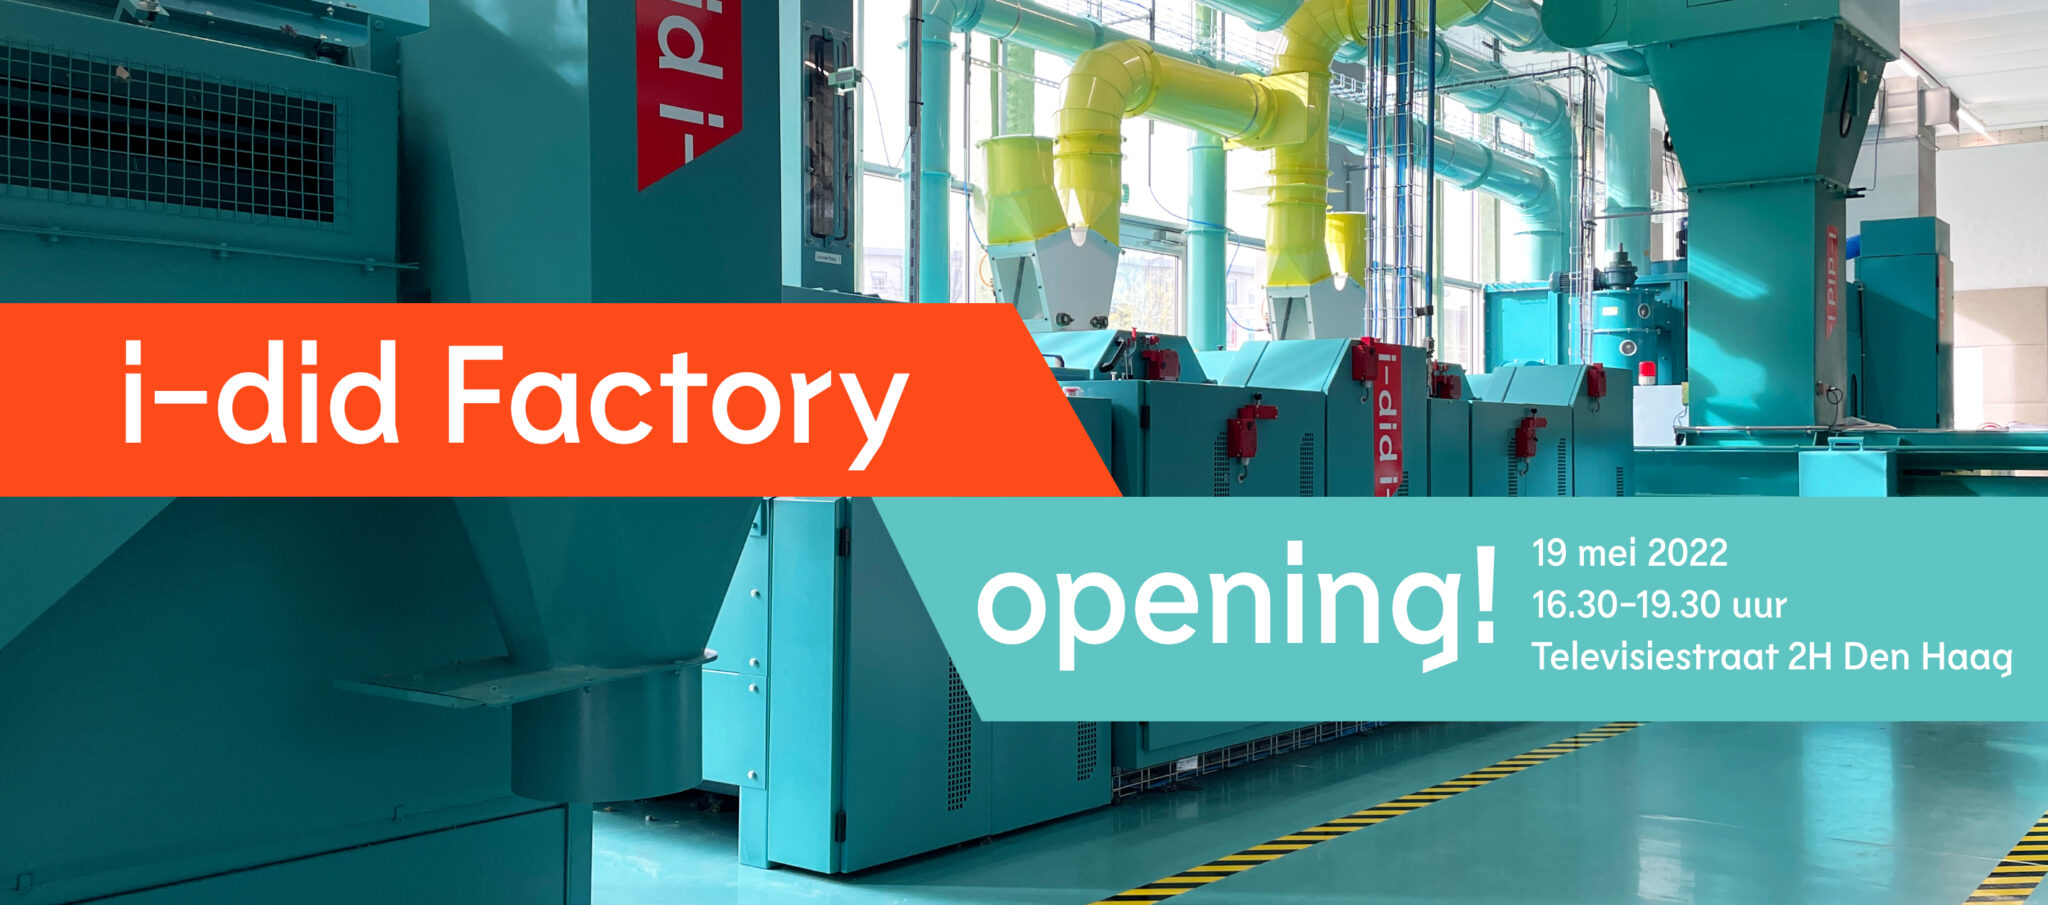 Circulaire viltfabriek i-did Factory opent binnenkort